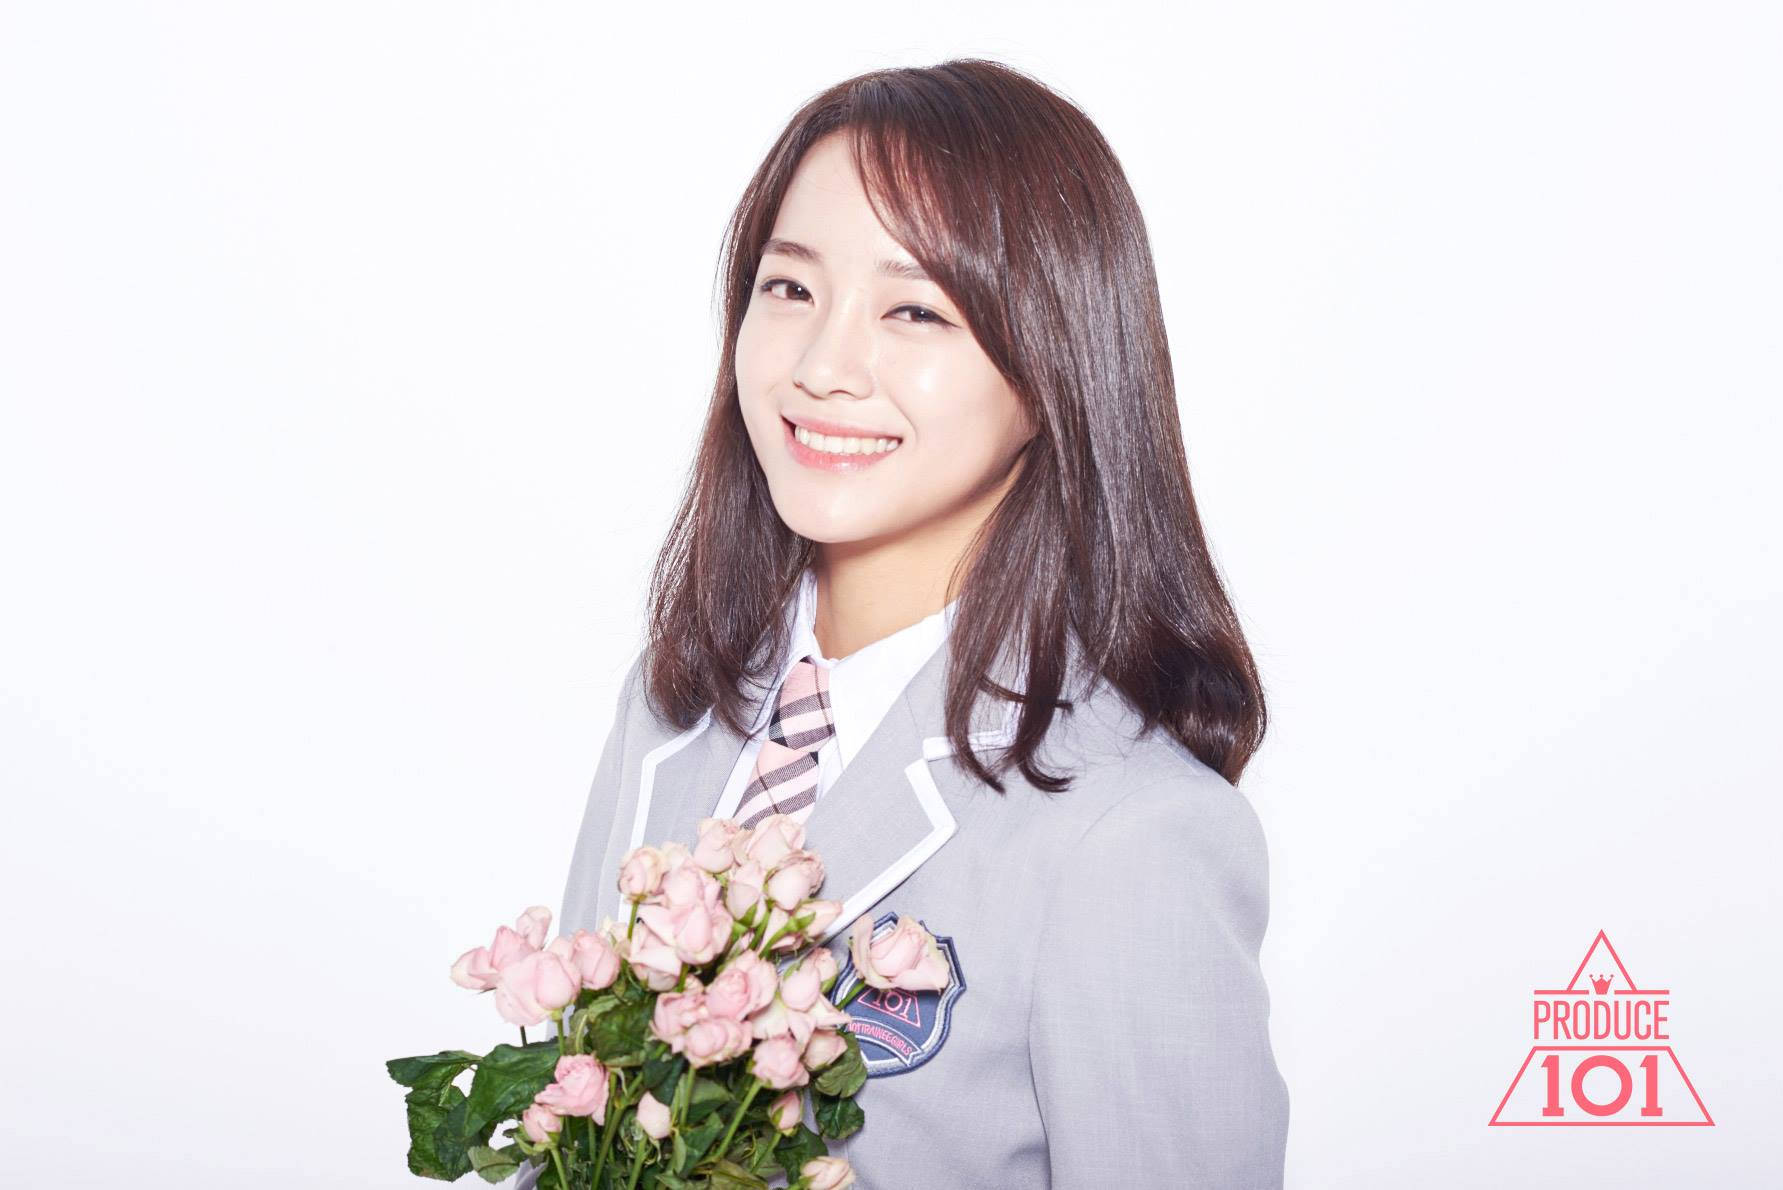 Kim Se Jeong Produce 101 Background